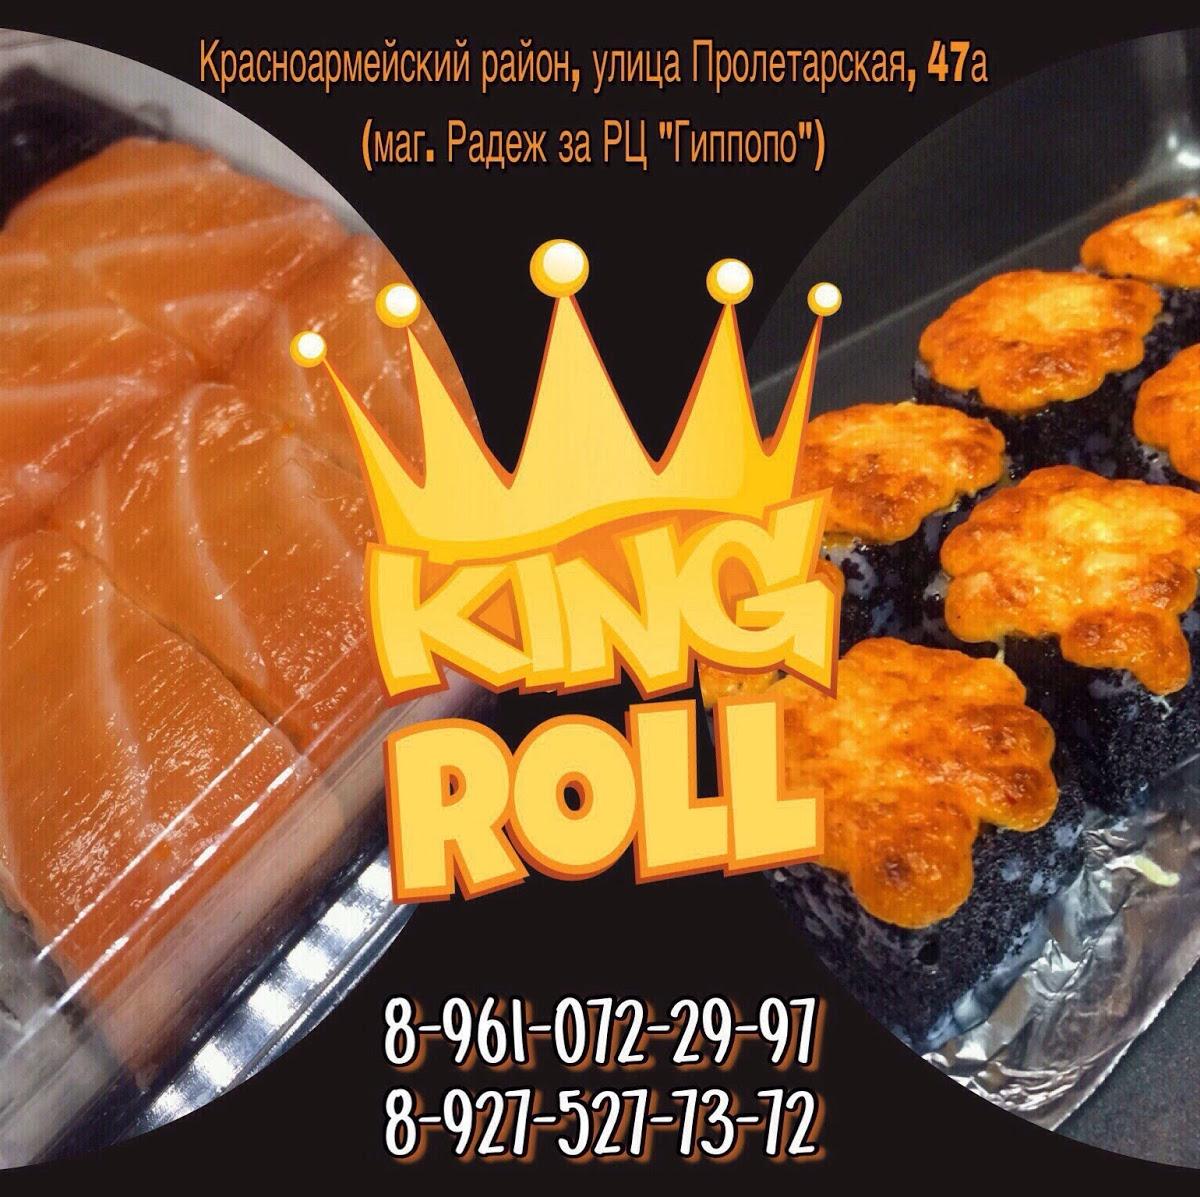 King Roll доставка роллов